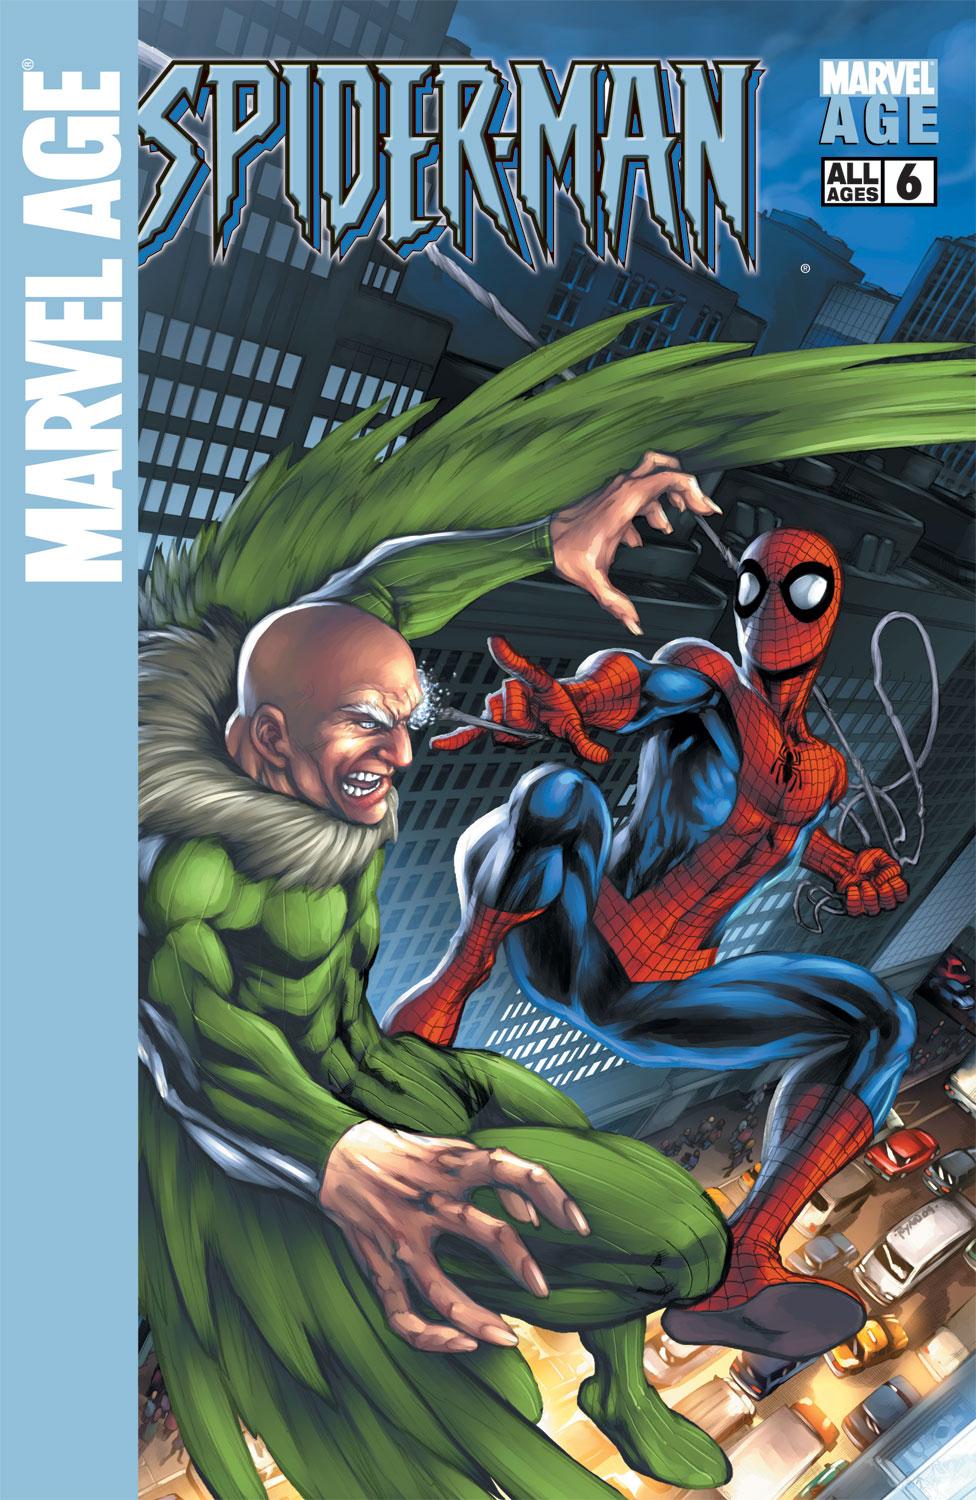 Marvel Age Spider-Man (2004) #6